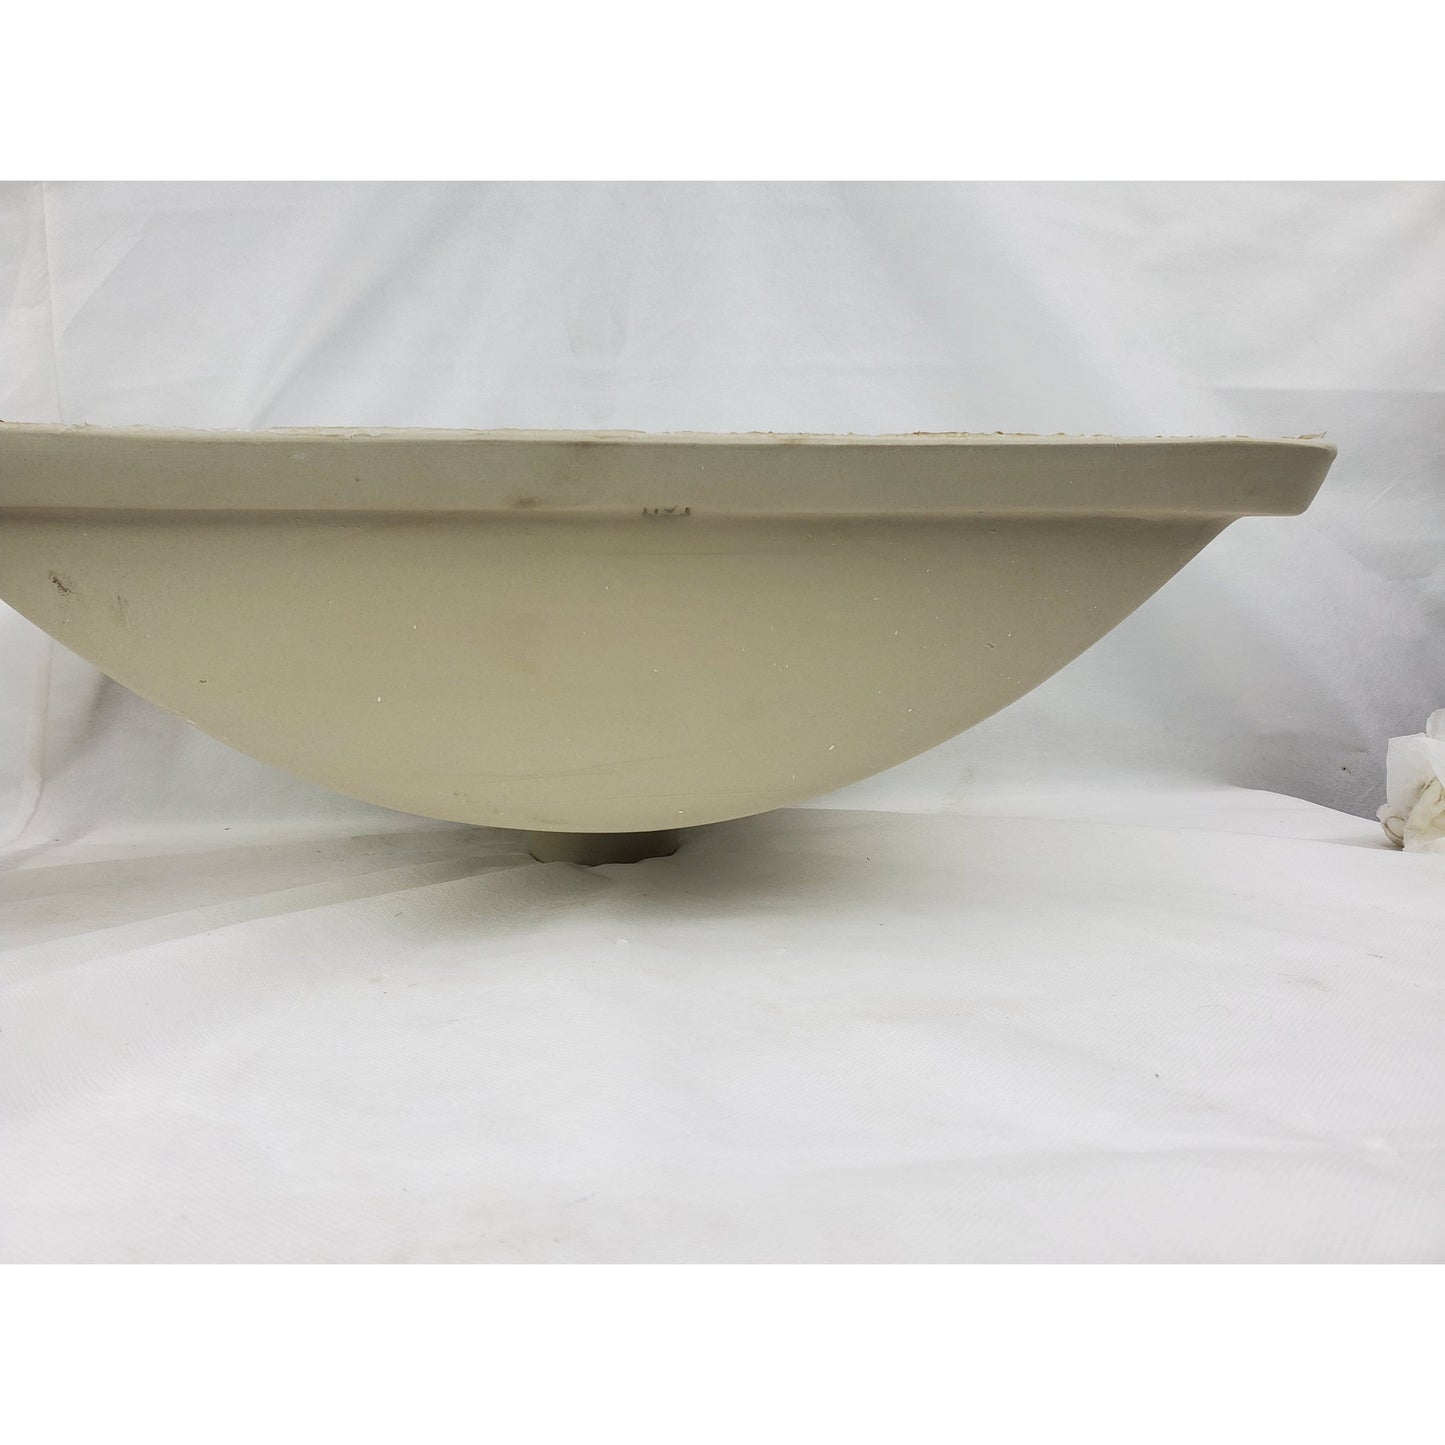 American Imaginations AI-31762 Rectangle White Ceramic Bathroom Undermount Sink with Enamel Glaze Finish